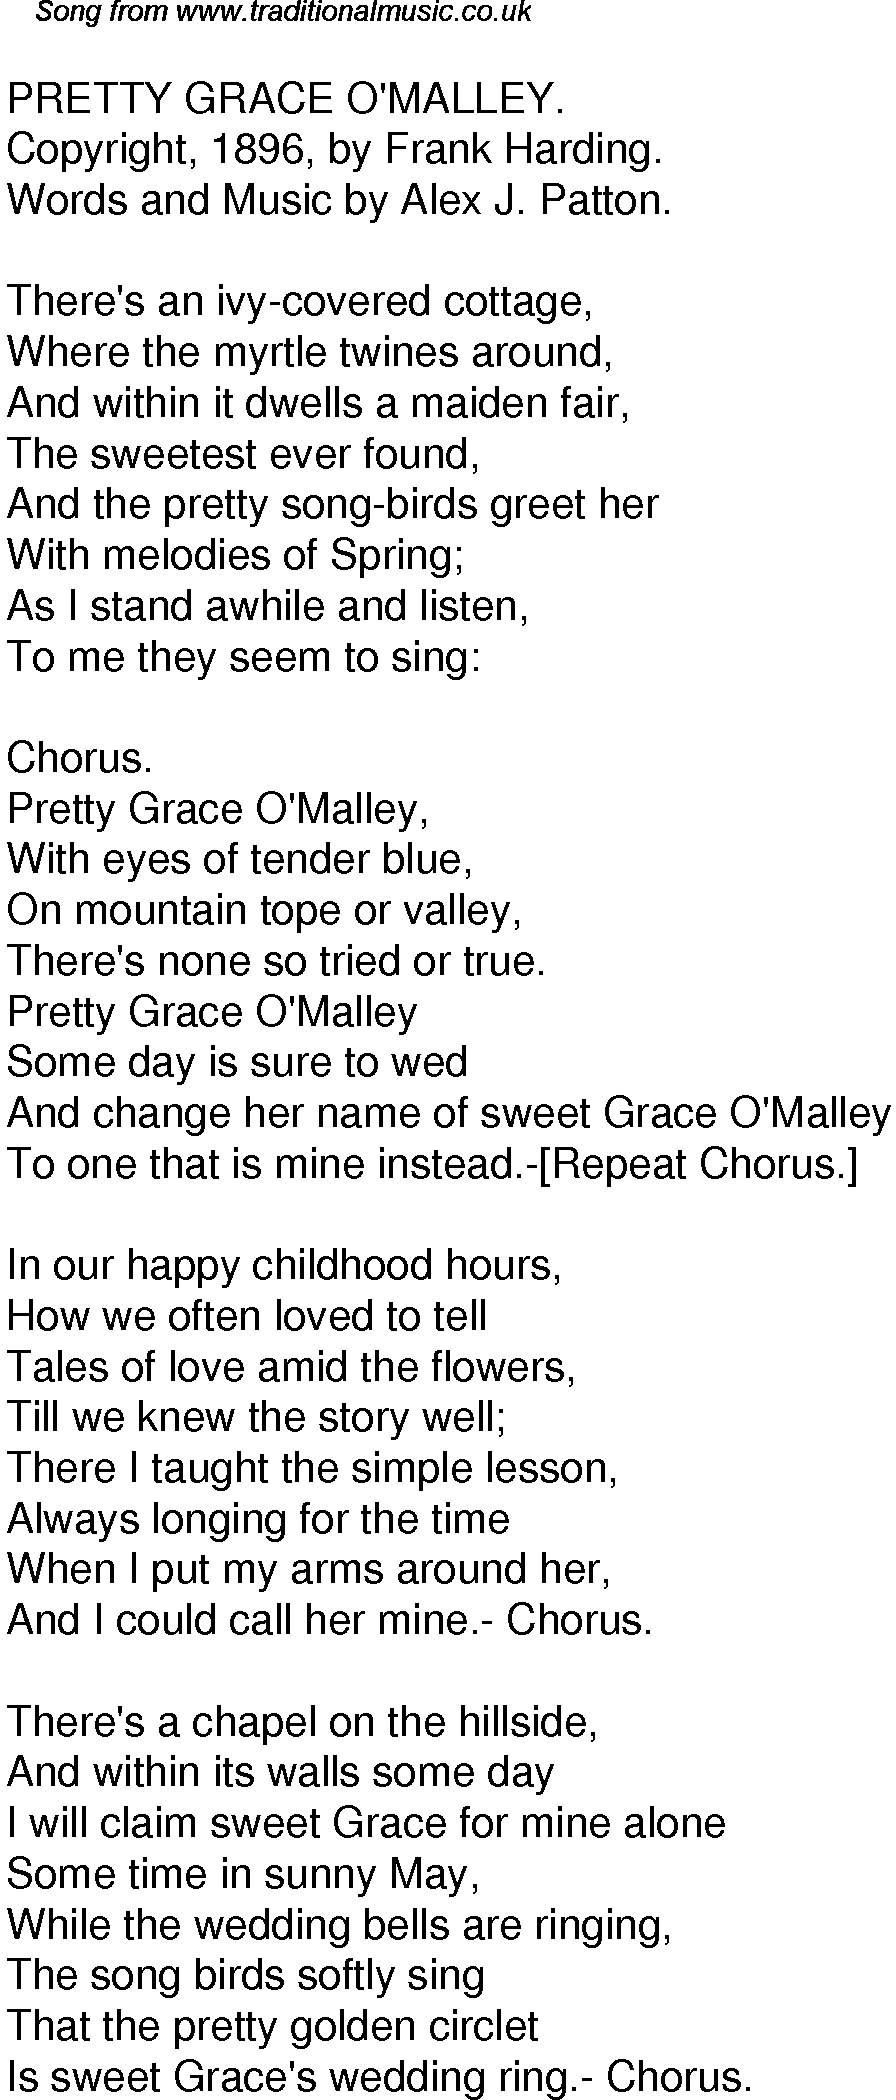 Grace o malley song